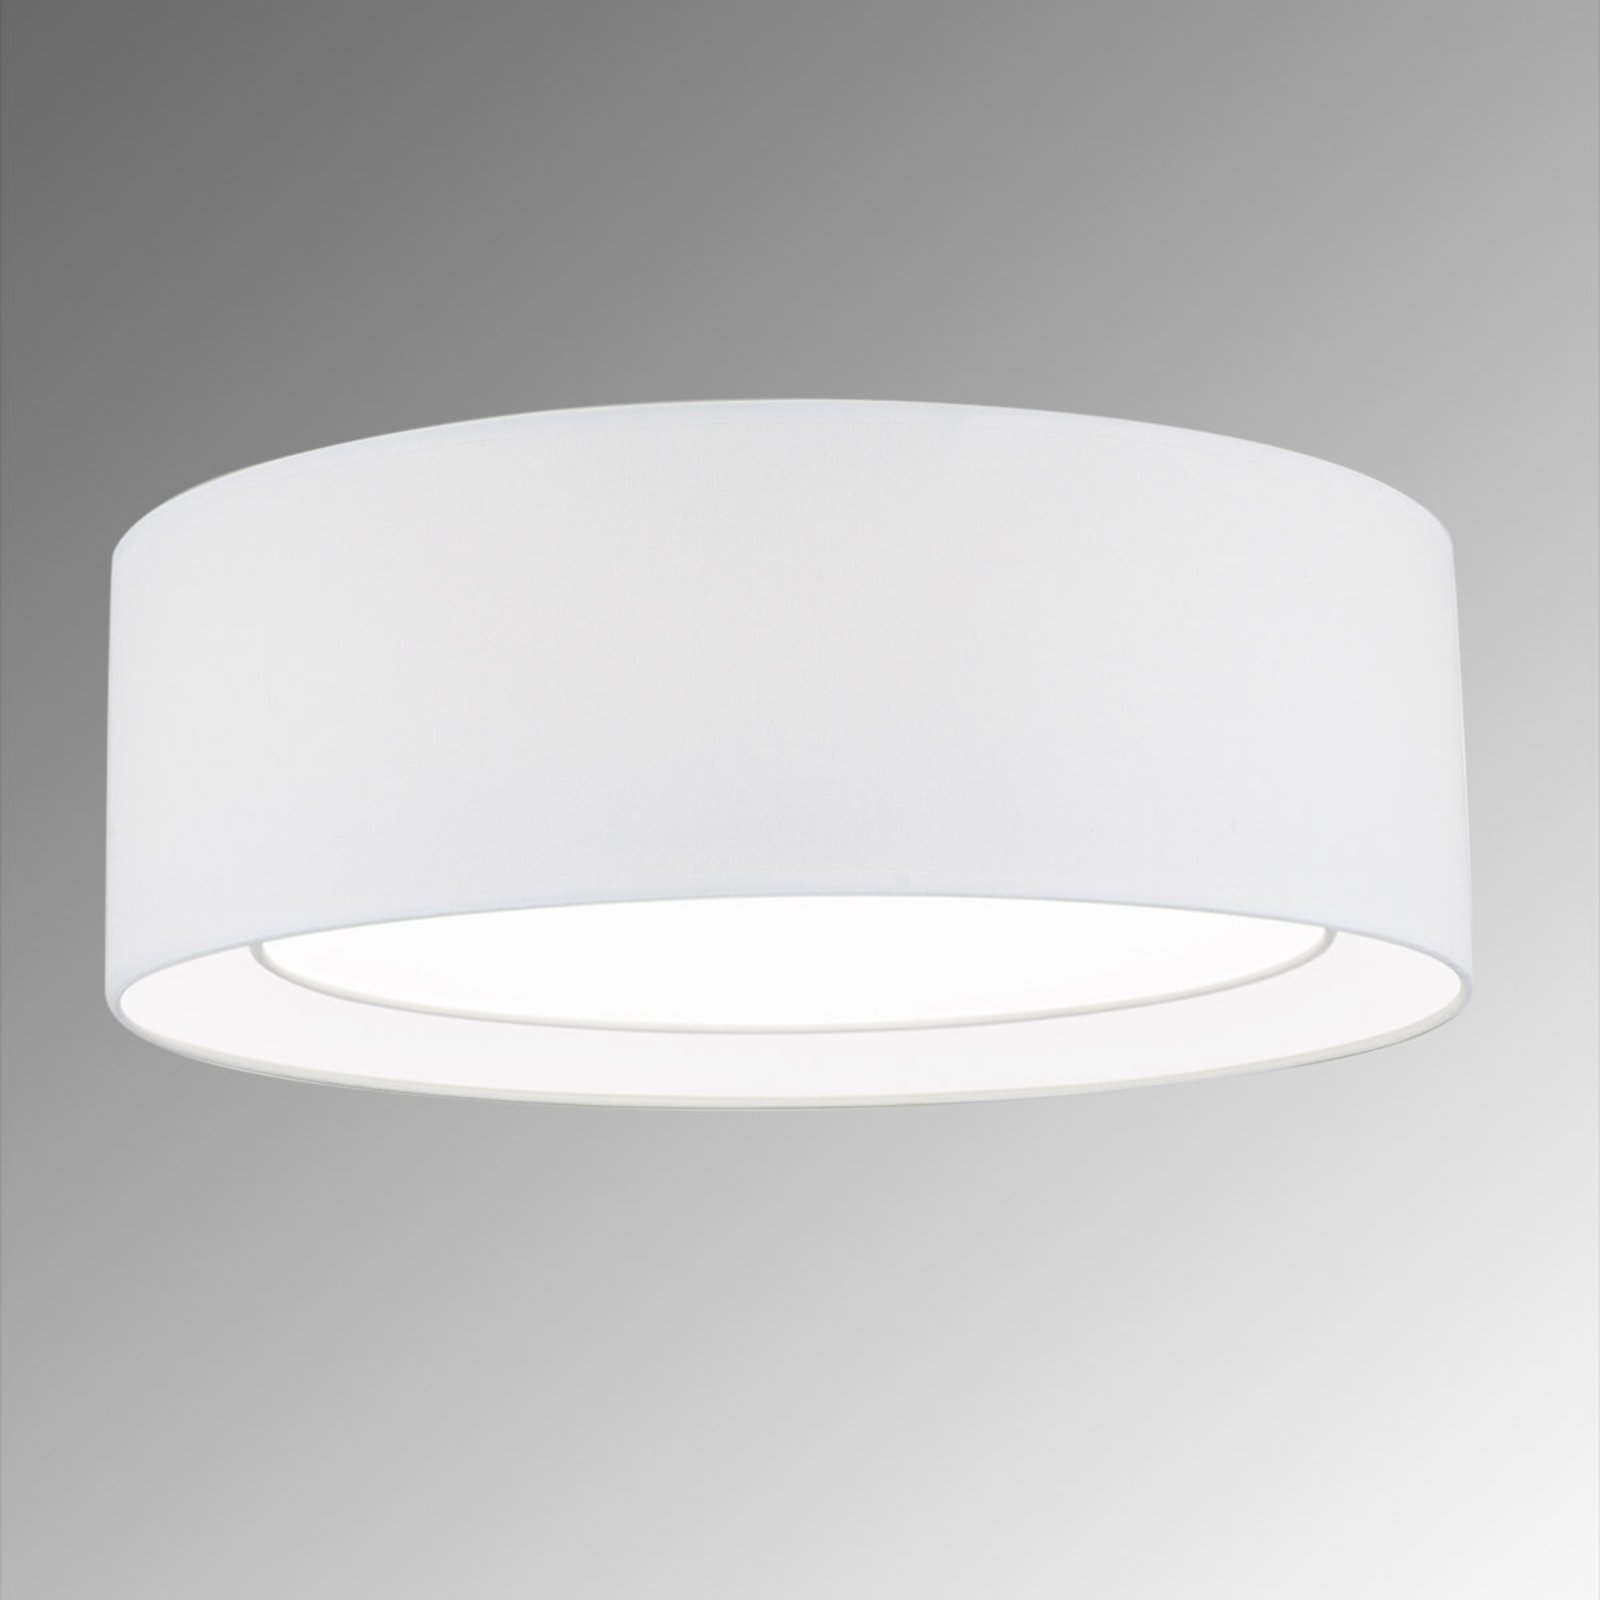 Round fabric ceiling light Antoni in white